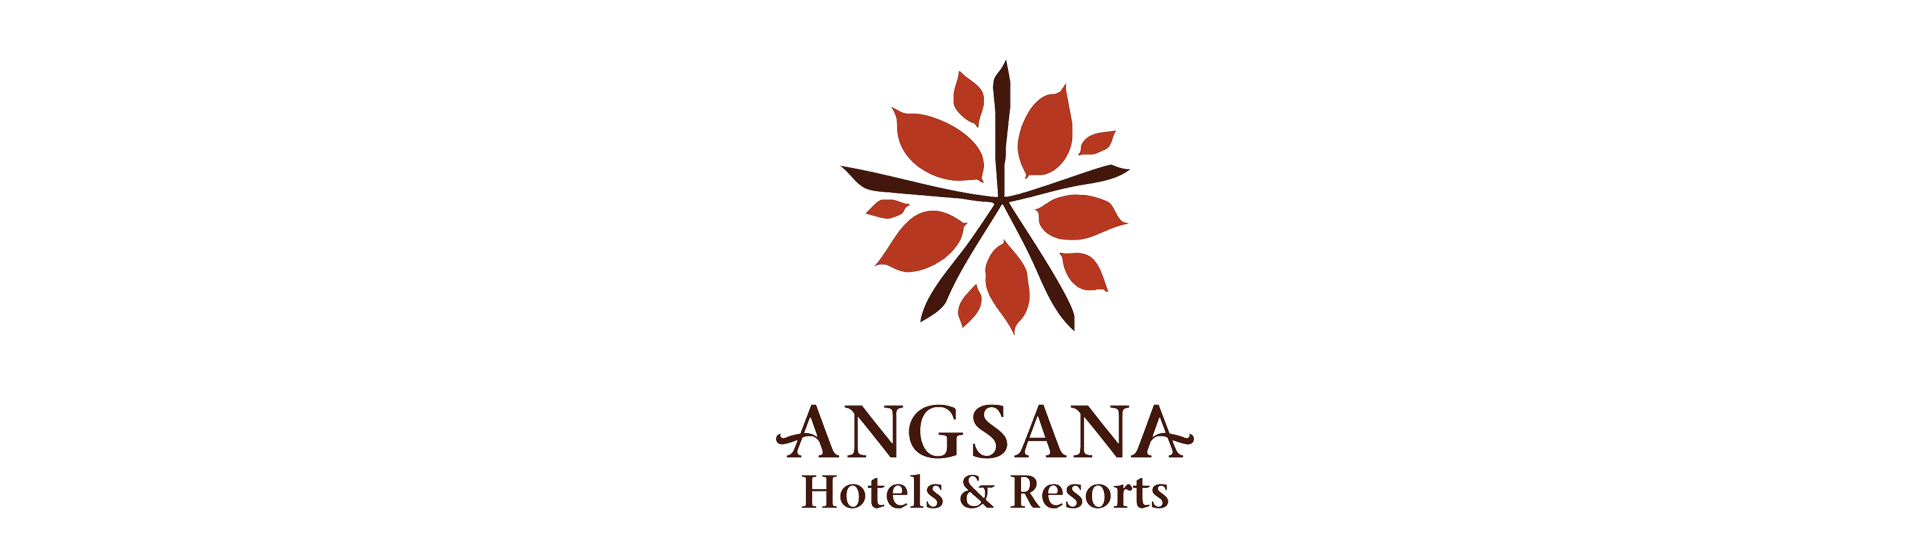 Логотип Отели Angsana Cuba